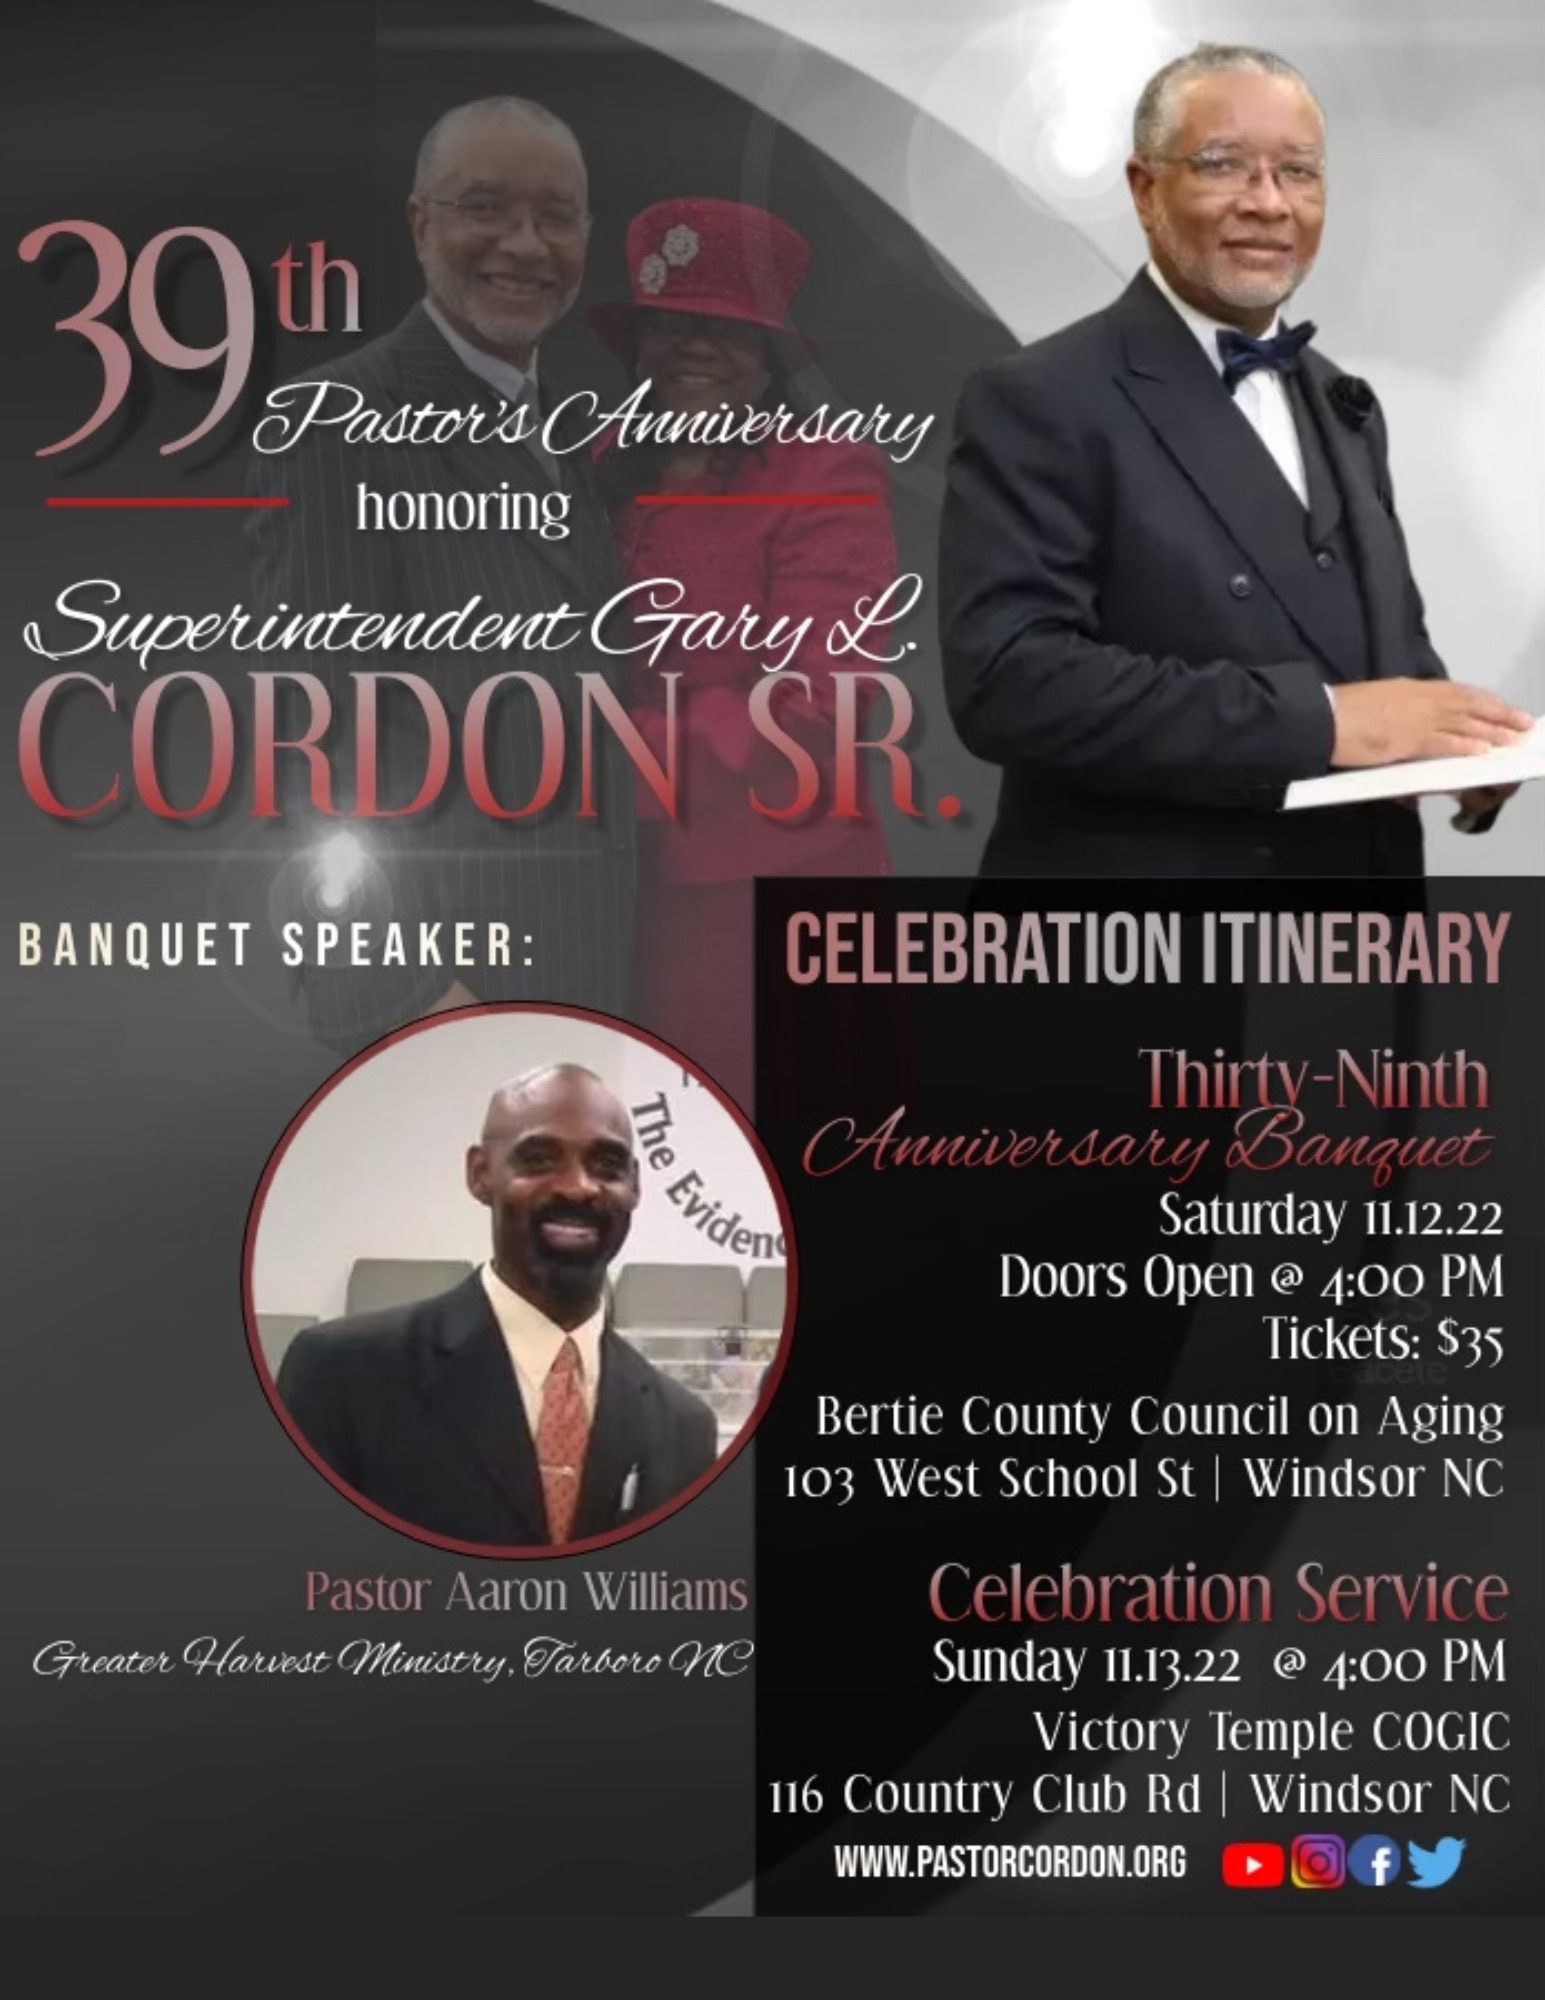 Superintendent Gary L Cordon Sr 39th Pastor’s Anniversary Banquet and Celebration